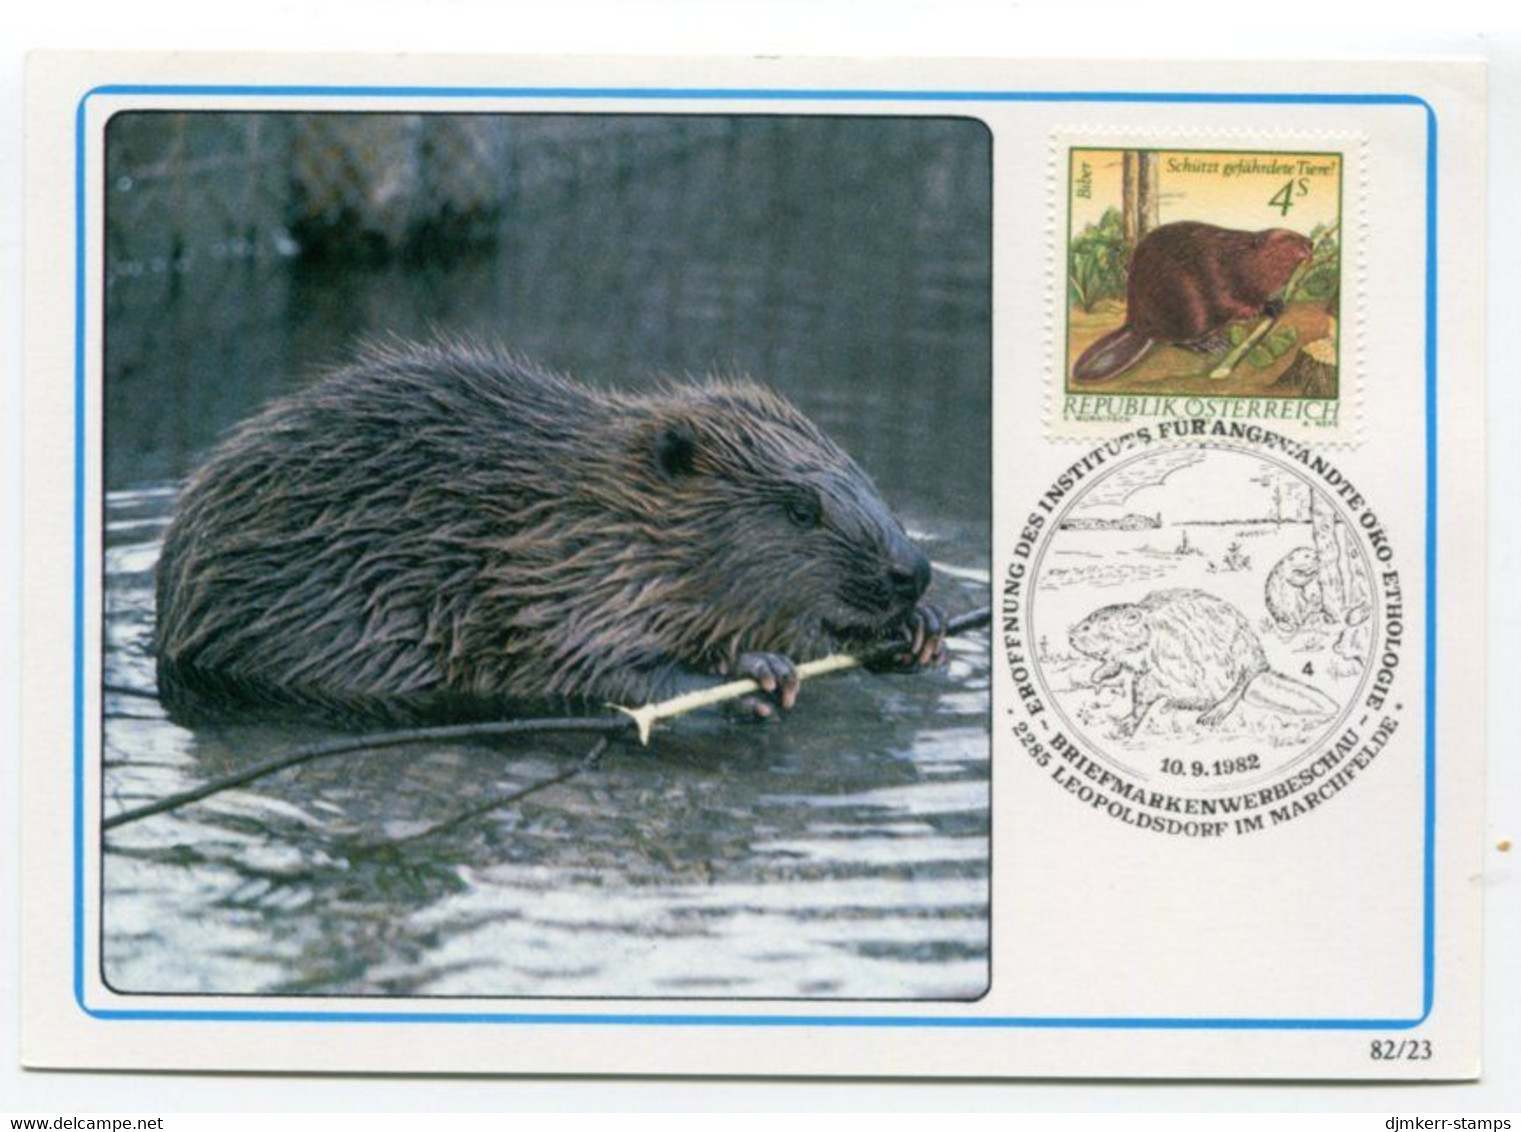 AUSTRIA 1982 Endangered Animals: Beaver On Maxicard.  Michel 1718 - Cartes-Maximum (CM)